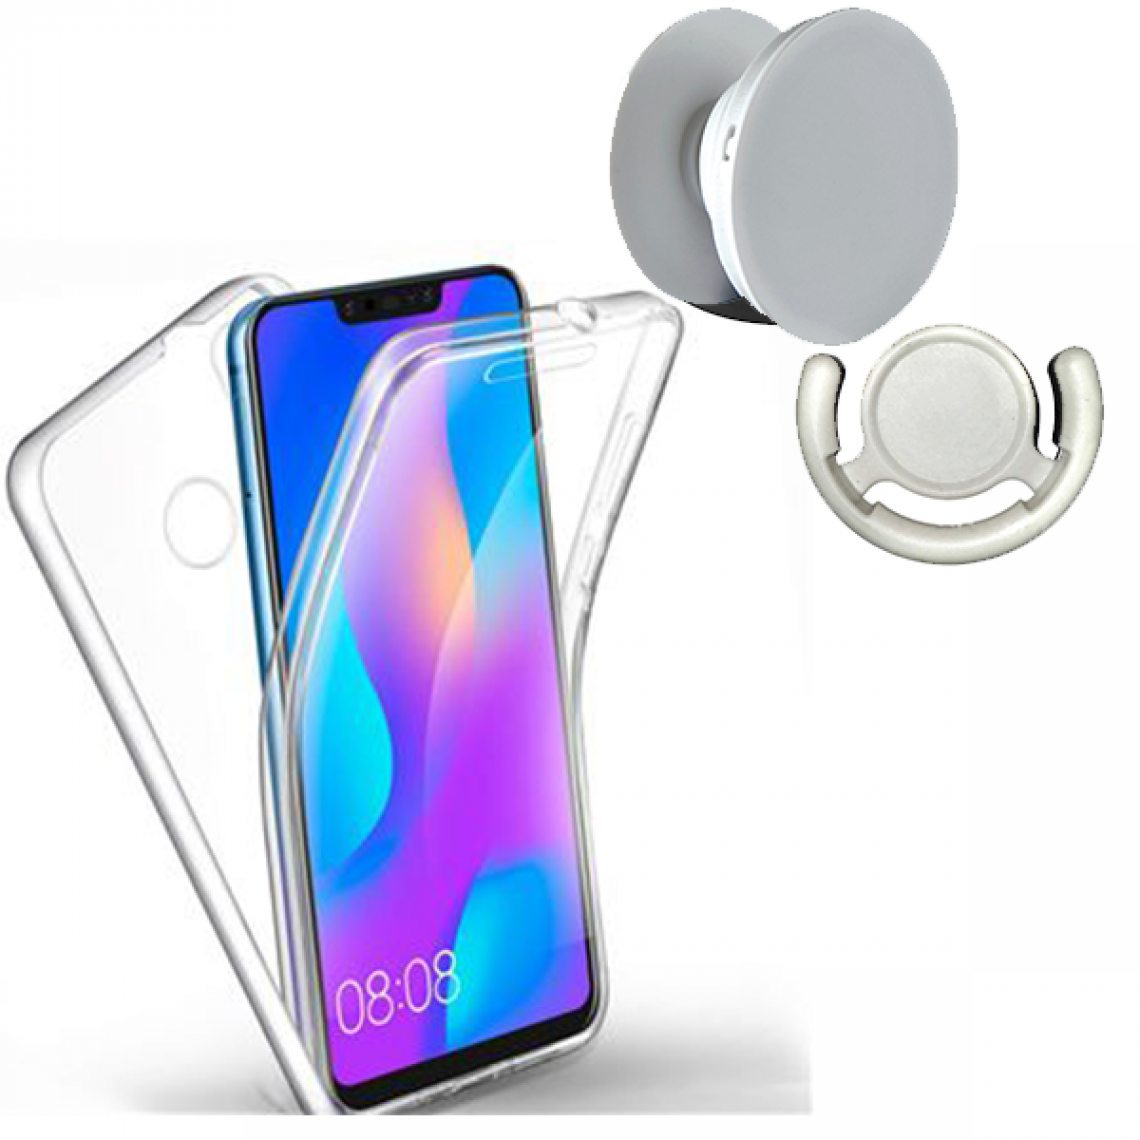 Phonecare - Kit Coque 3x1 360° Impact Protection + 1 PopSocket + 1 Support PopSocket Blanc - Huawei P Smart Plus 2019 - Coque, étui smartphone